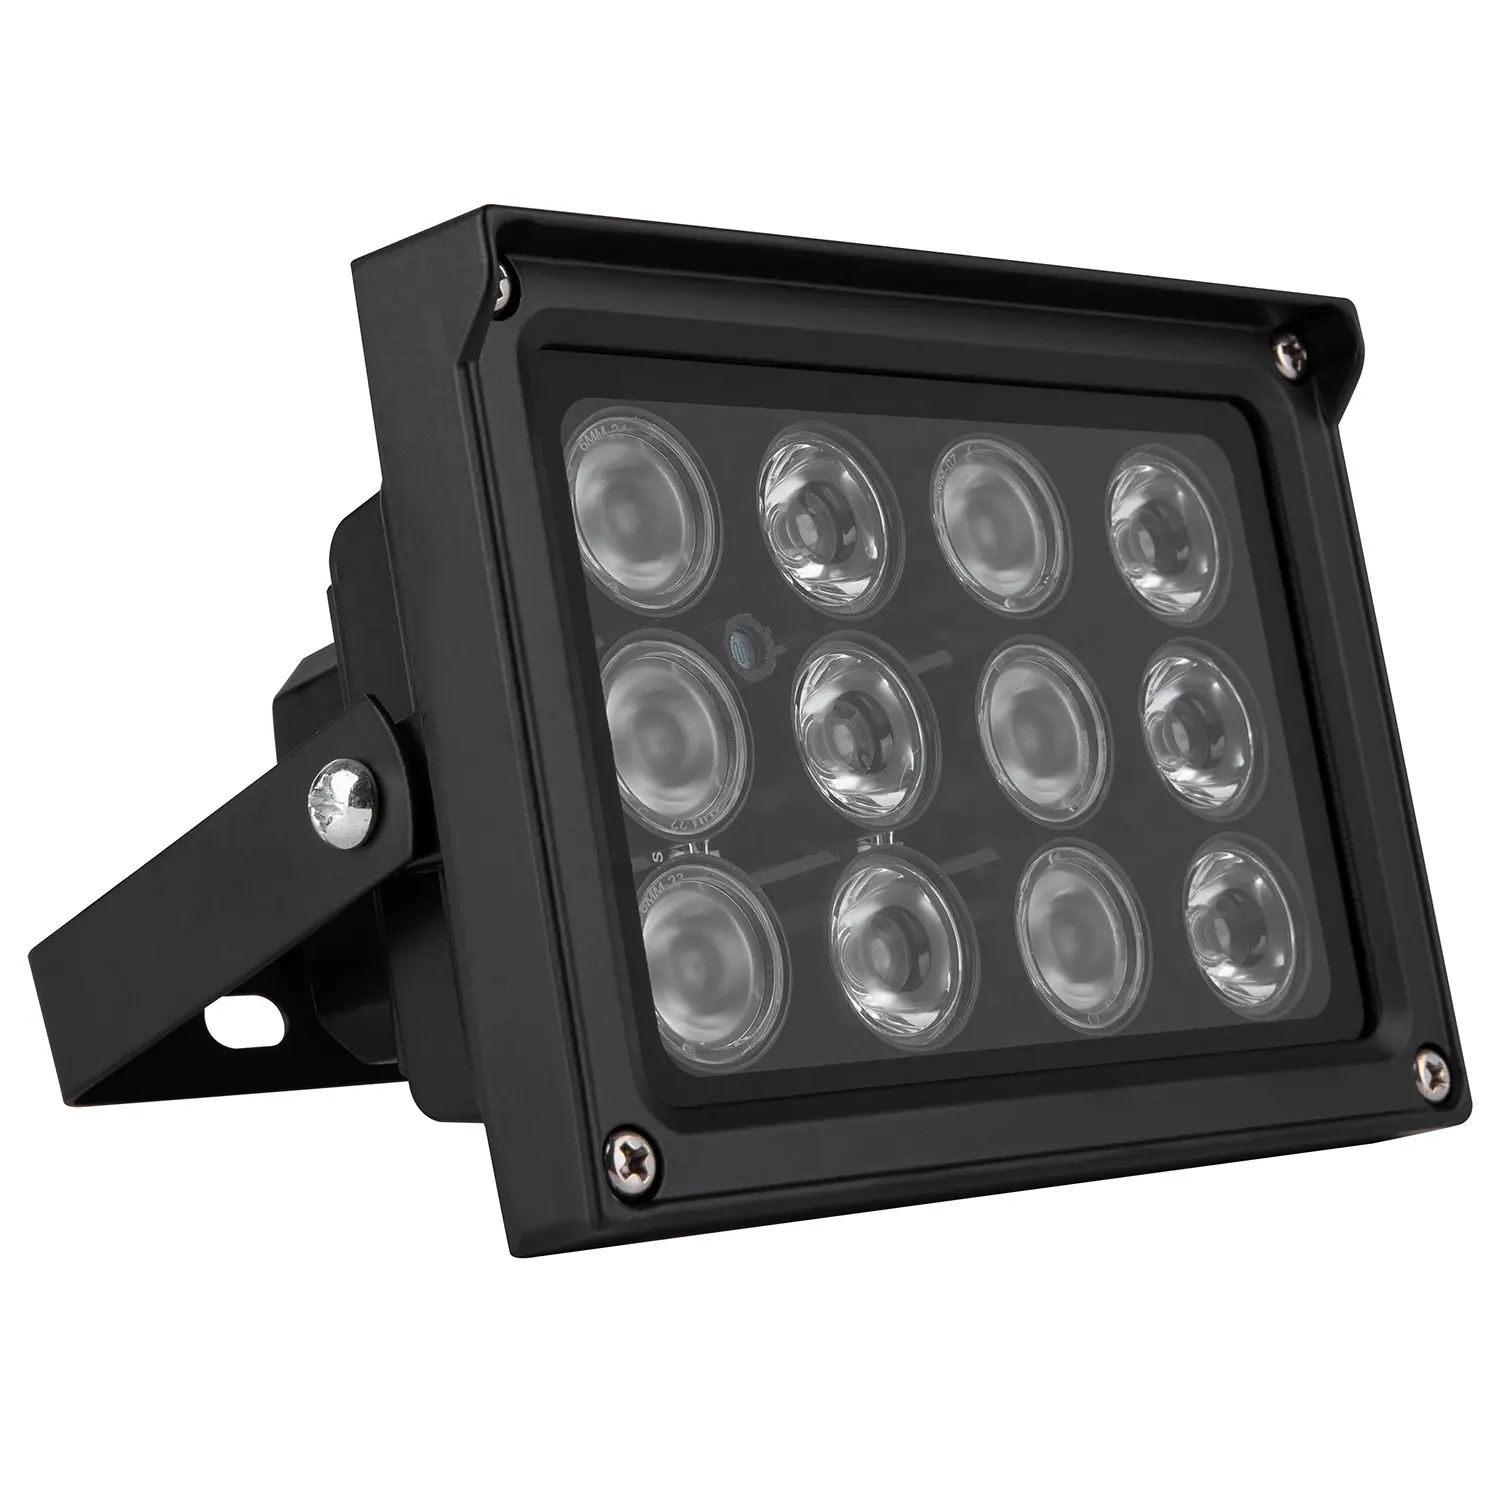 12 LED Wide Angle IR Illuminator Light Waterproof DC12V 850nm Infrared Illuminator for Night Vision Outdoor CCTV Security Camera